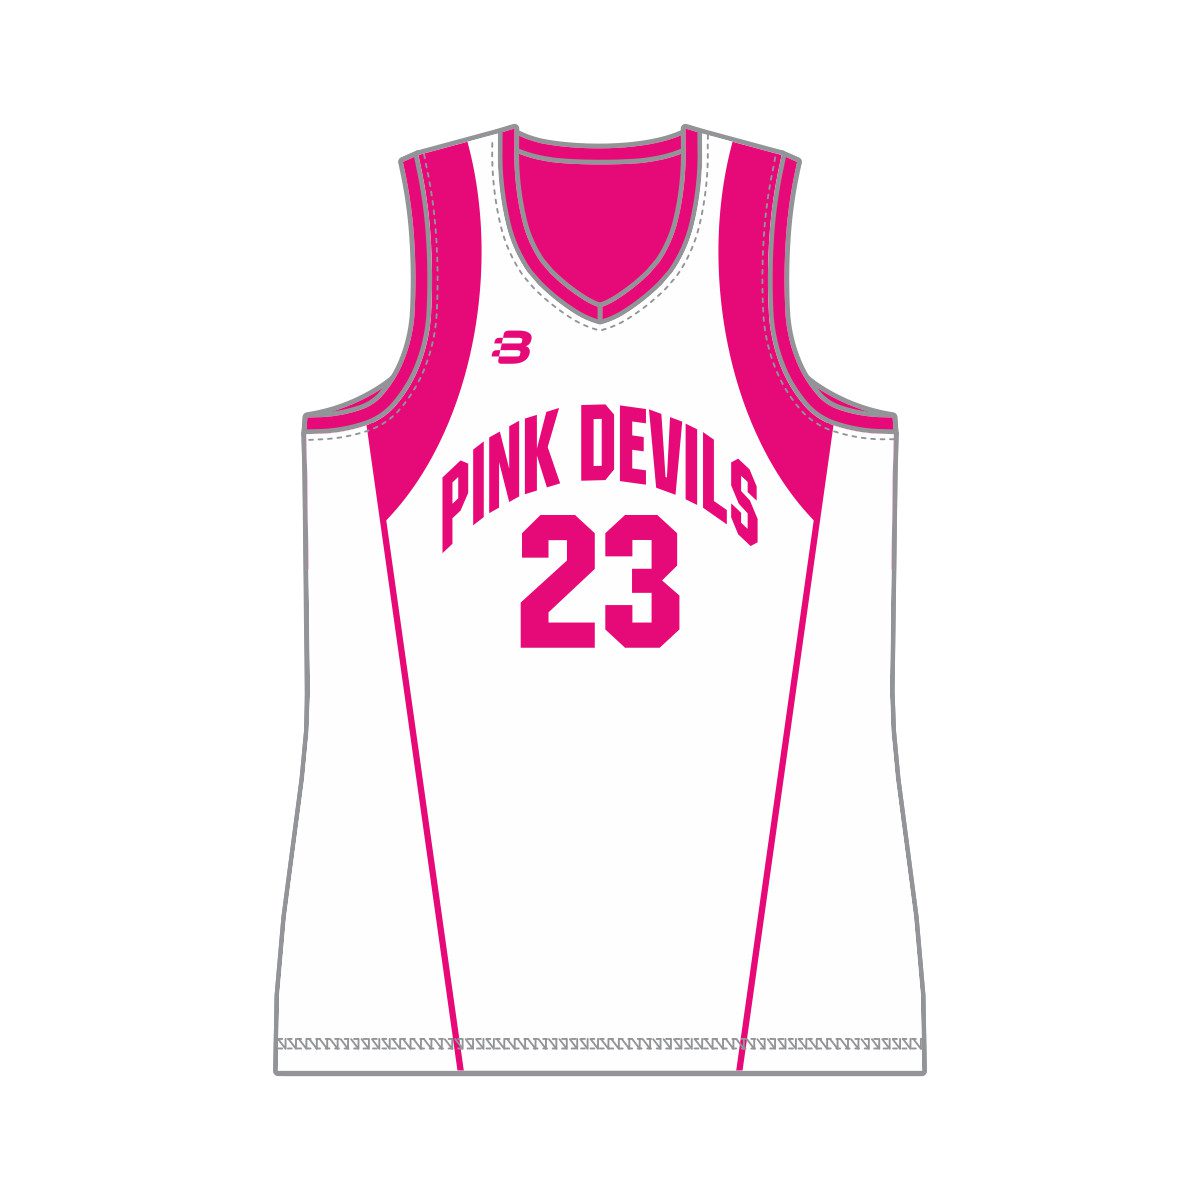 Sturt Sabres Basketball Club Domestic Pink Devils Reversible Basketball Singlet Womens 5350